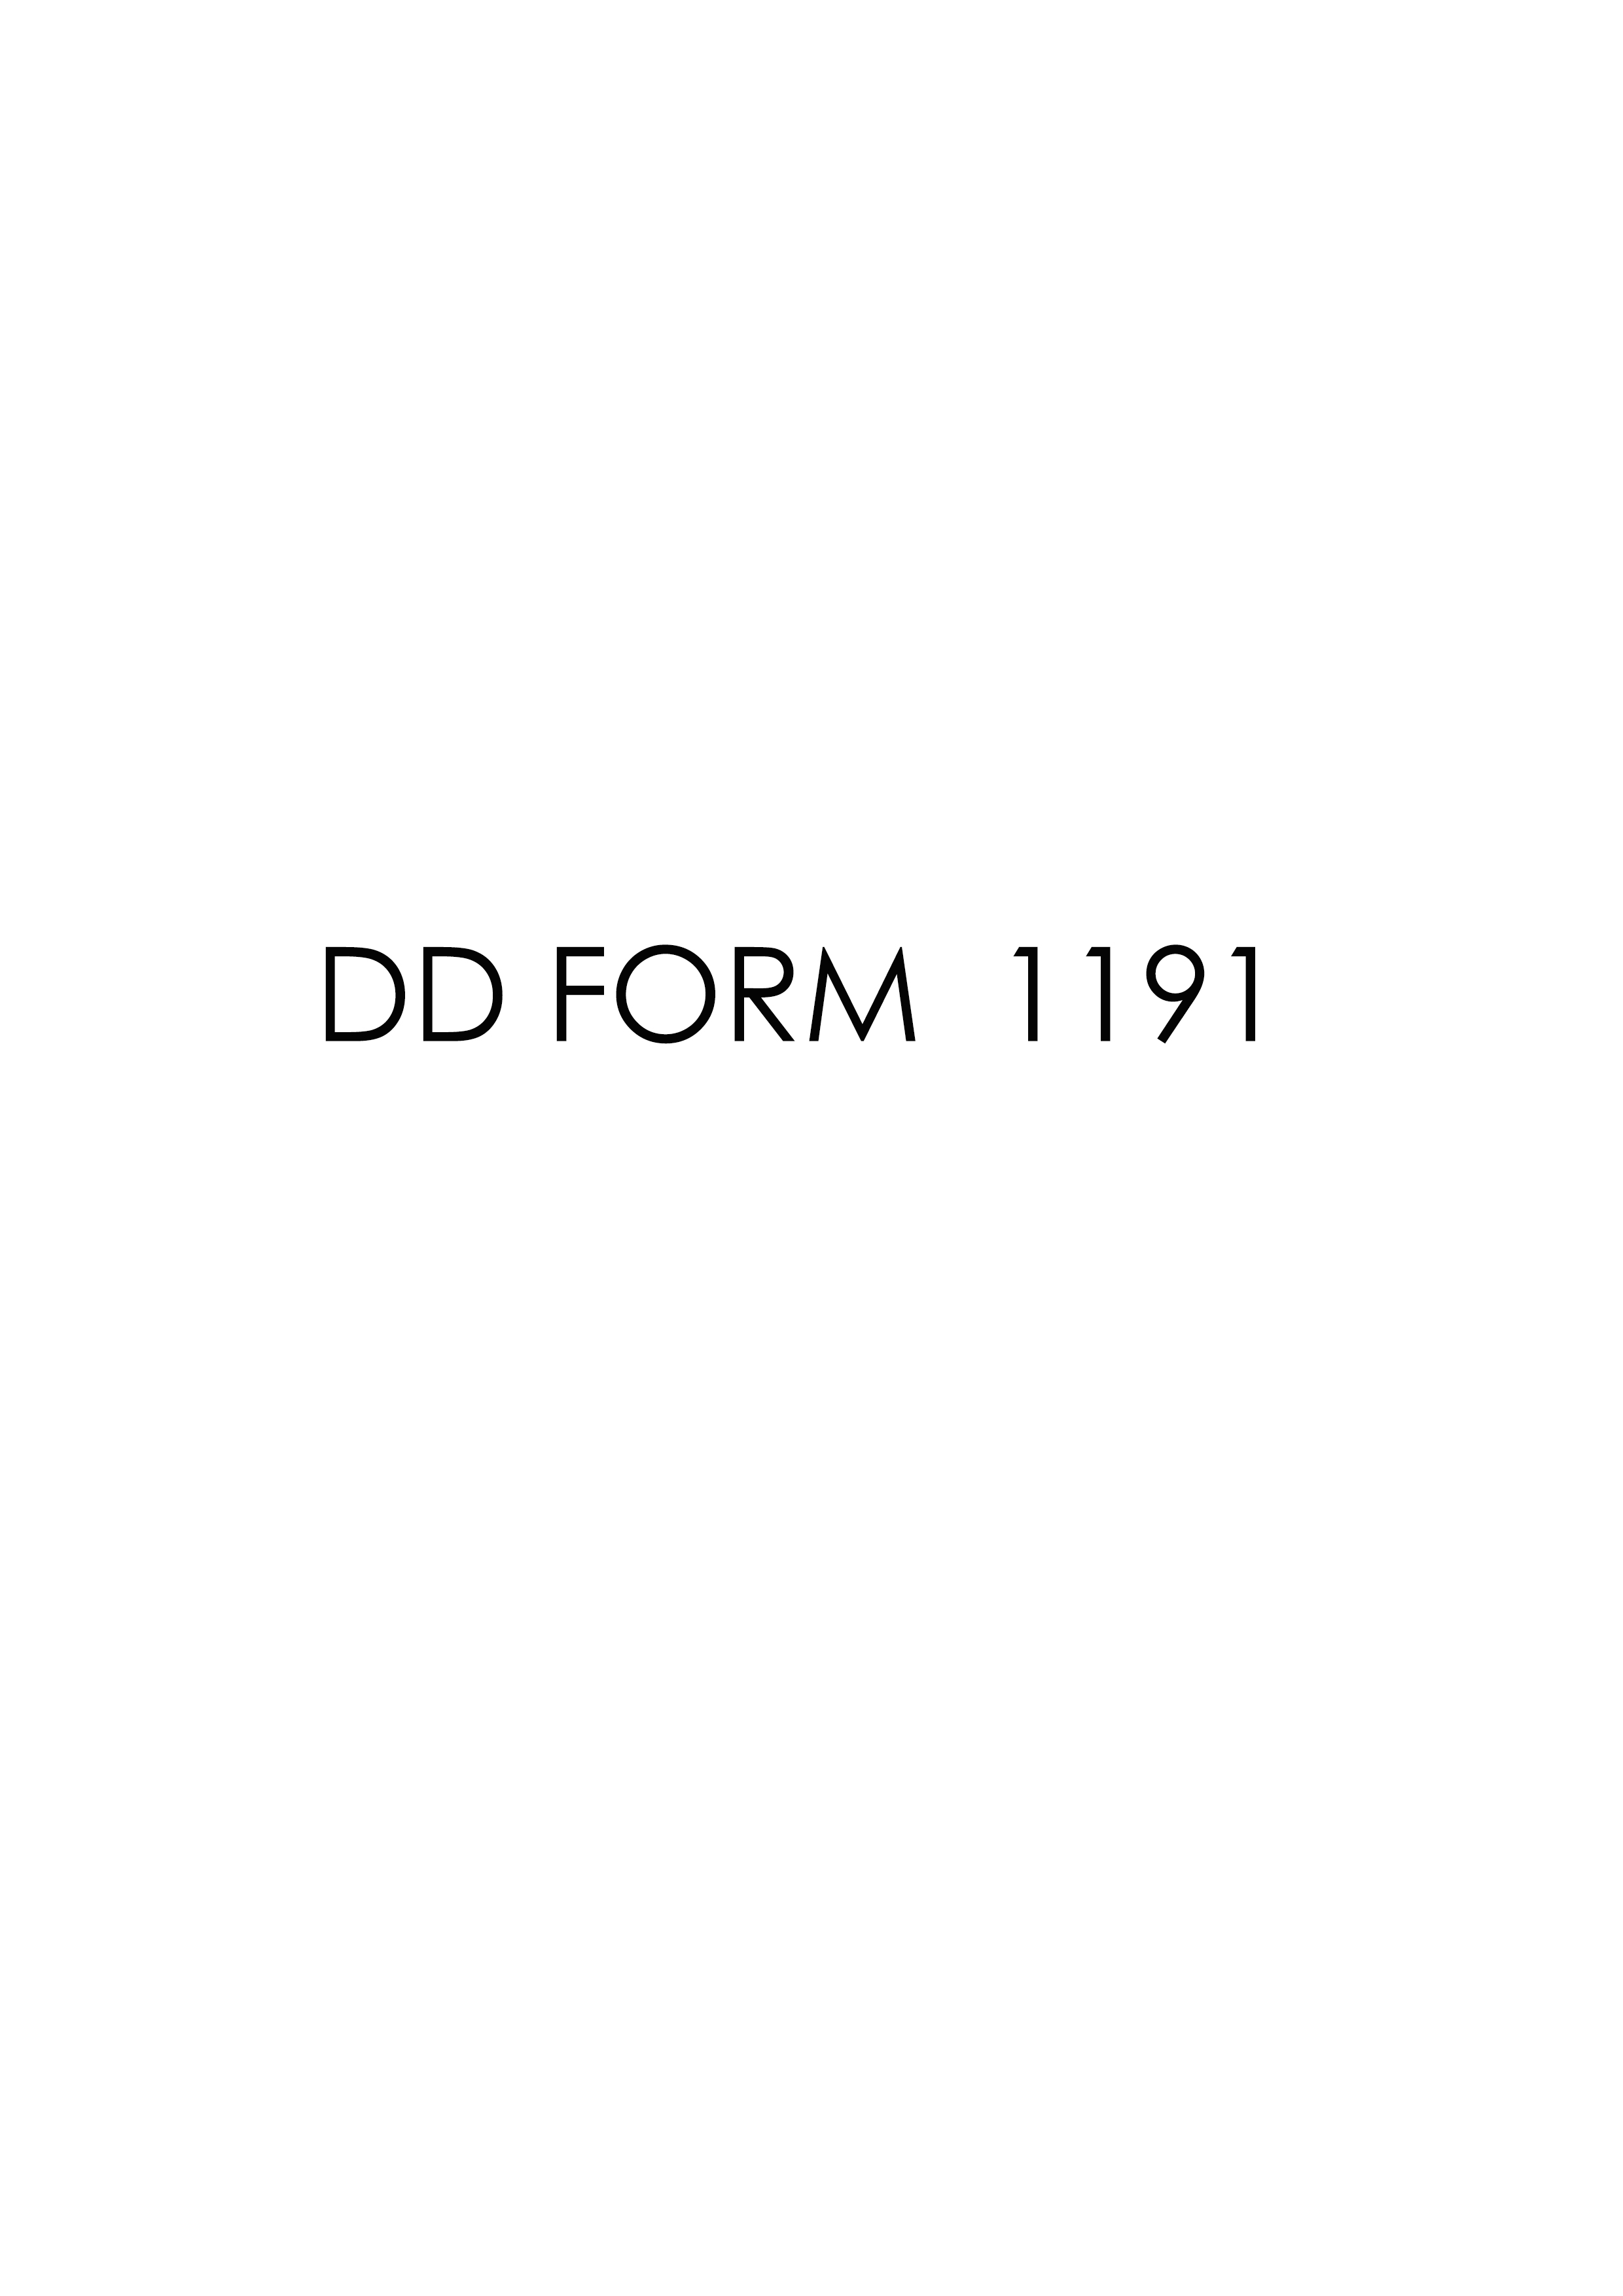 Download dd 1191 Form